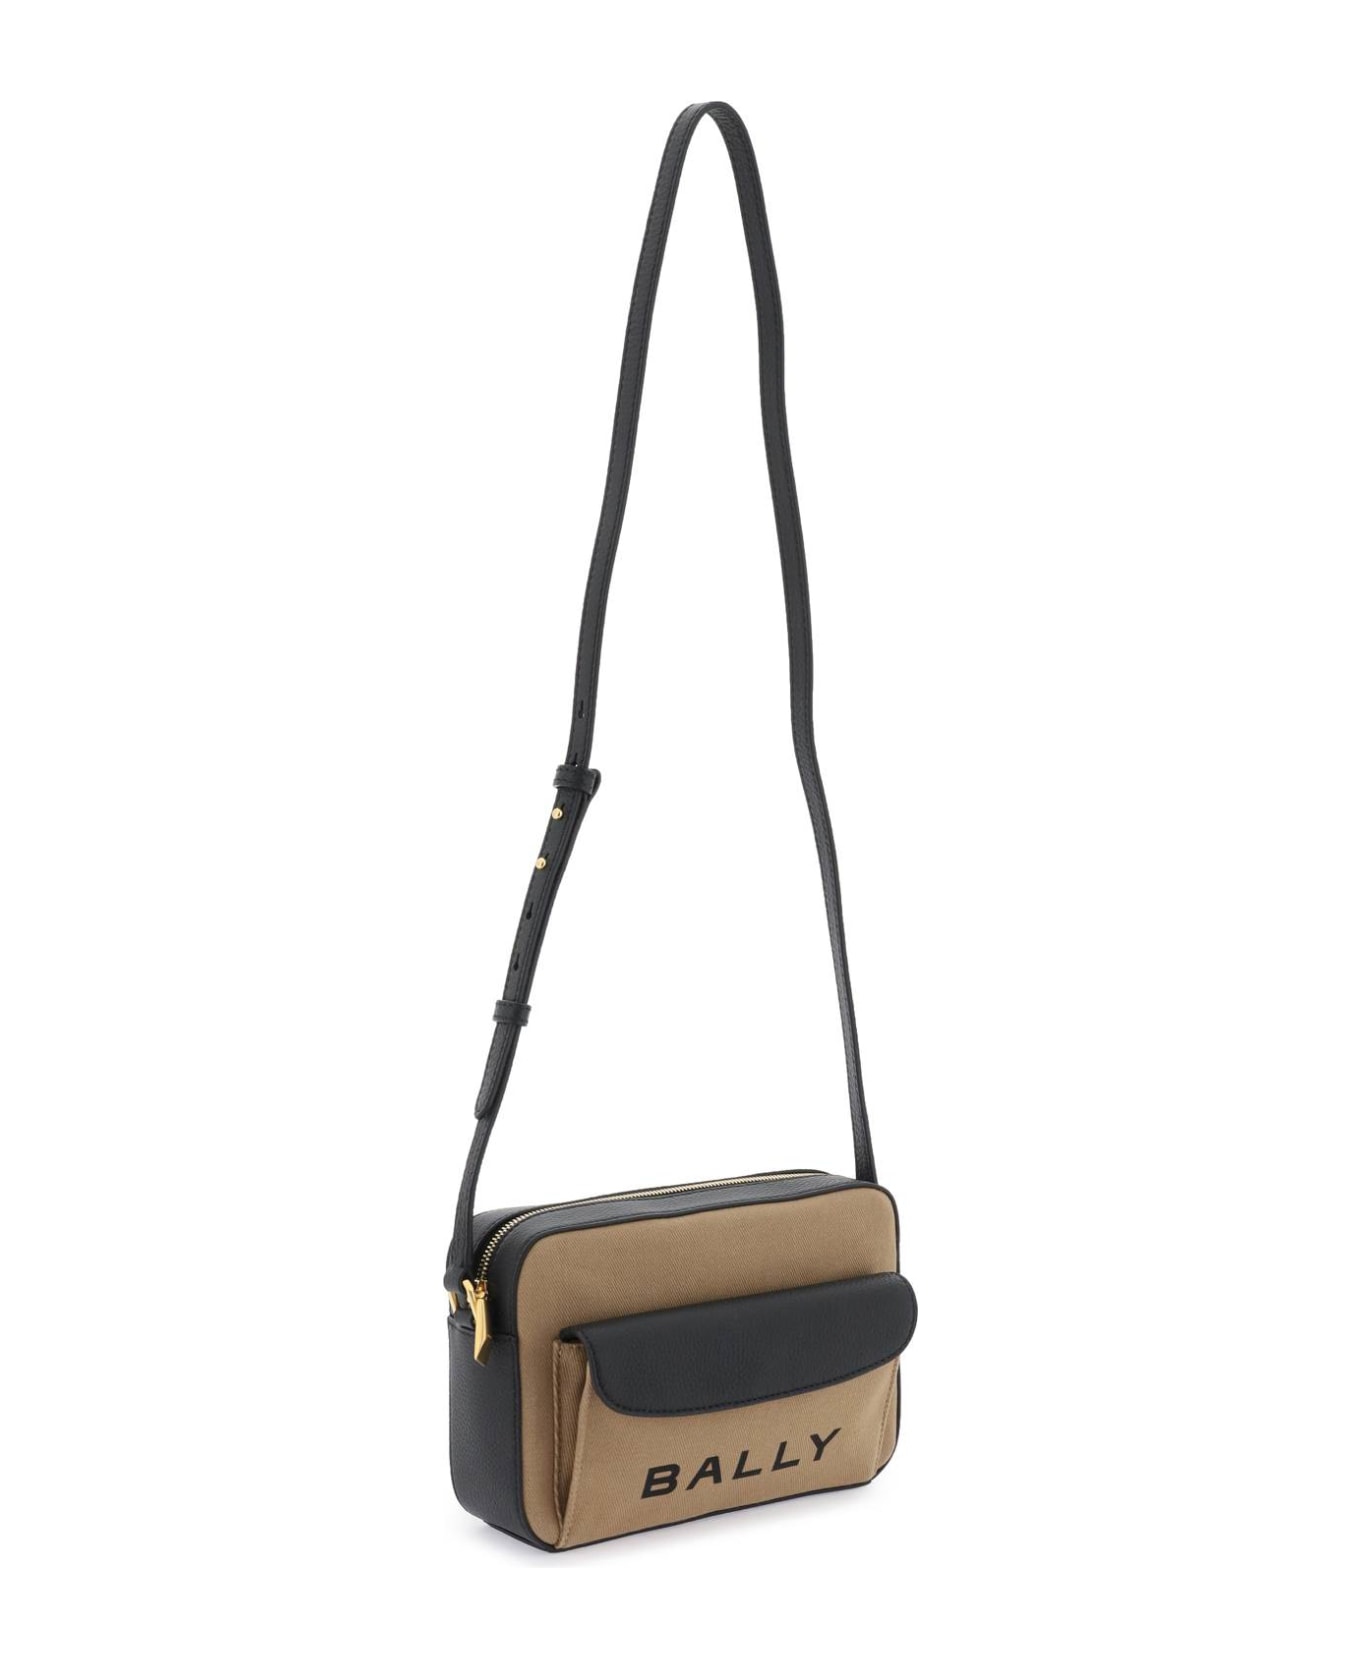 Bally 'bar' Crossbody Bag - SAND BLACK ORO (Black)